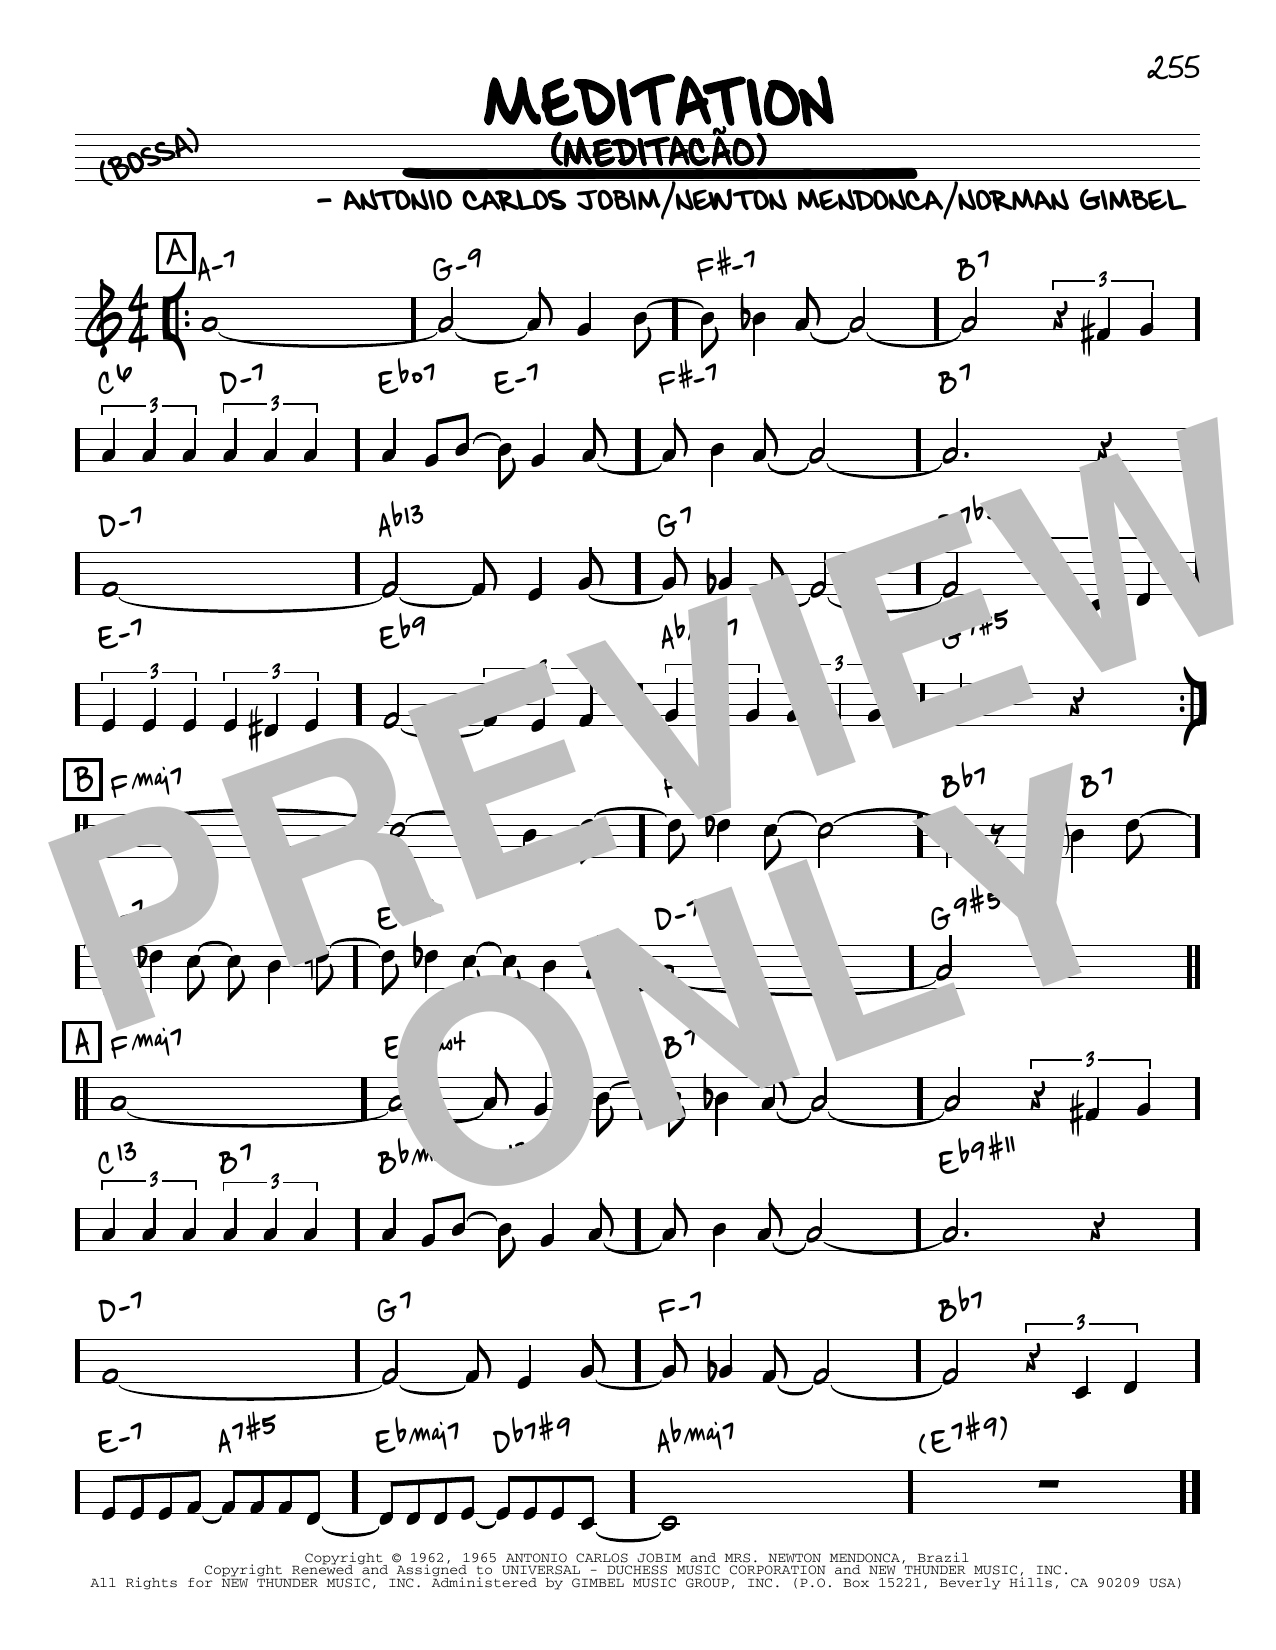 Antonio Carlos Jobim Meditation (Meditacao) [Reharmonized version] (arr. Jack Grassel) Sheet Music Notes & Chords for Real Book – Melody & Chords - Download or Print PDF